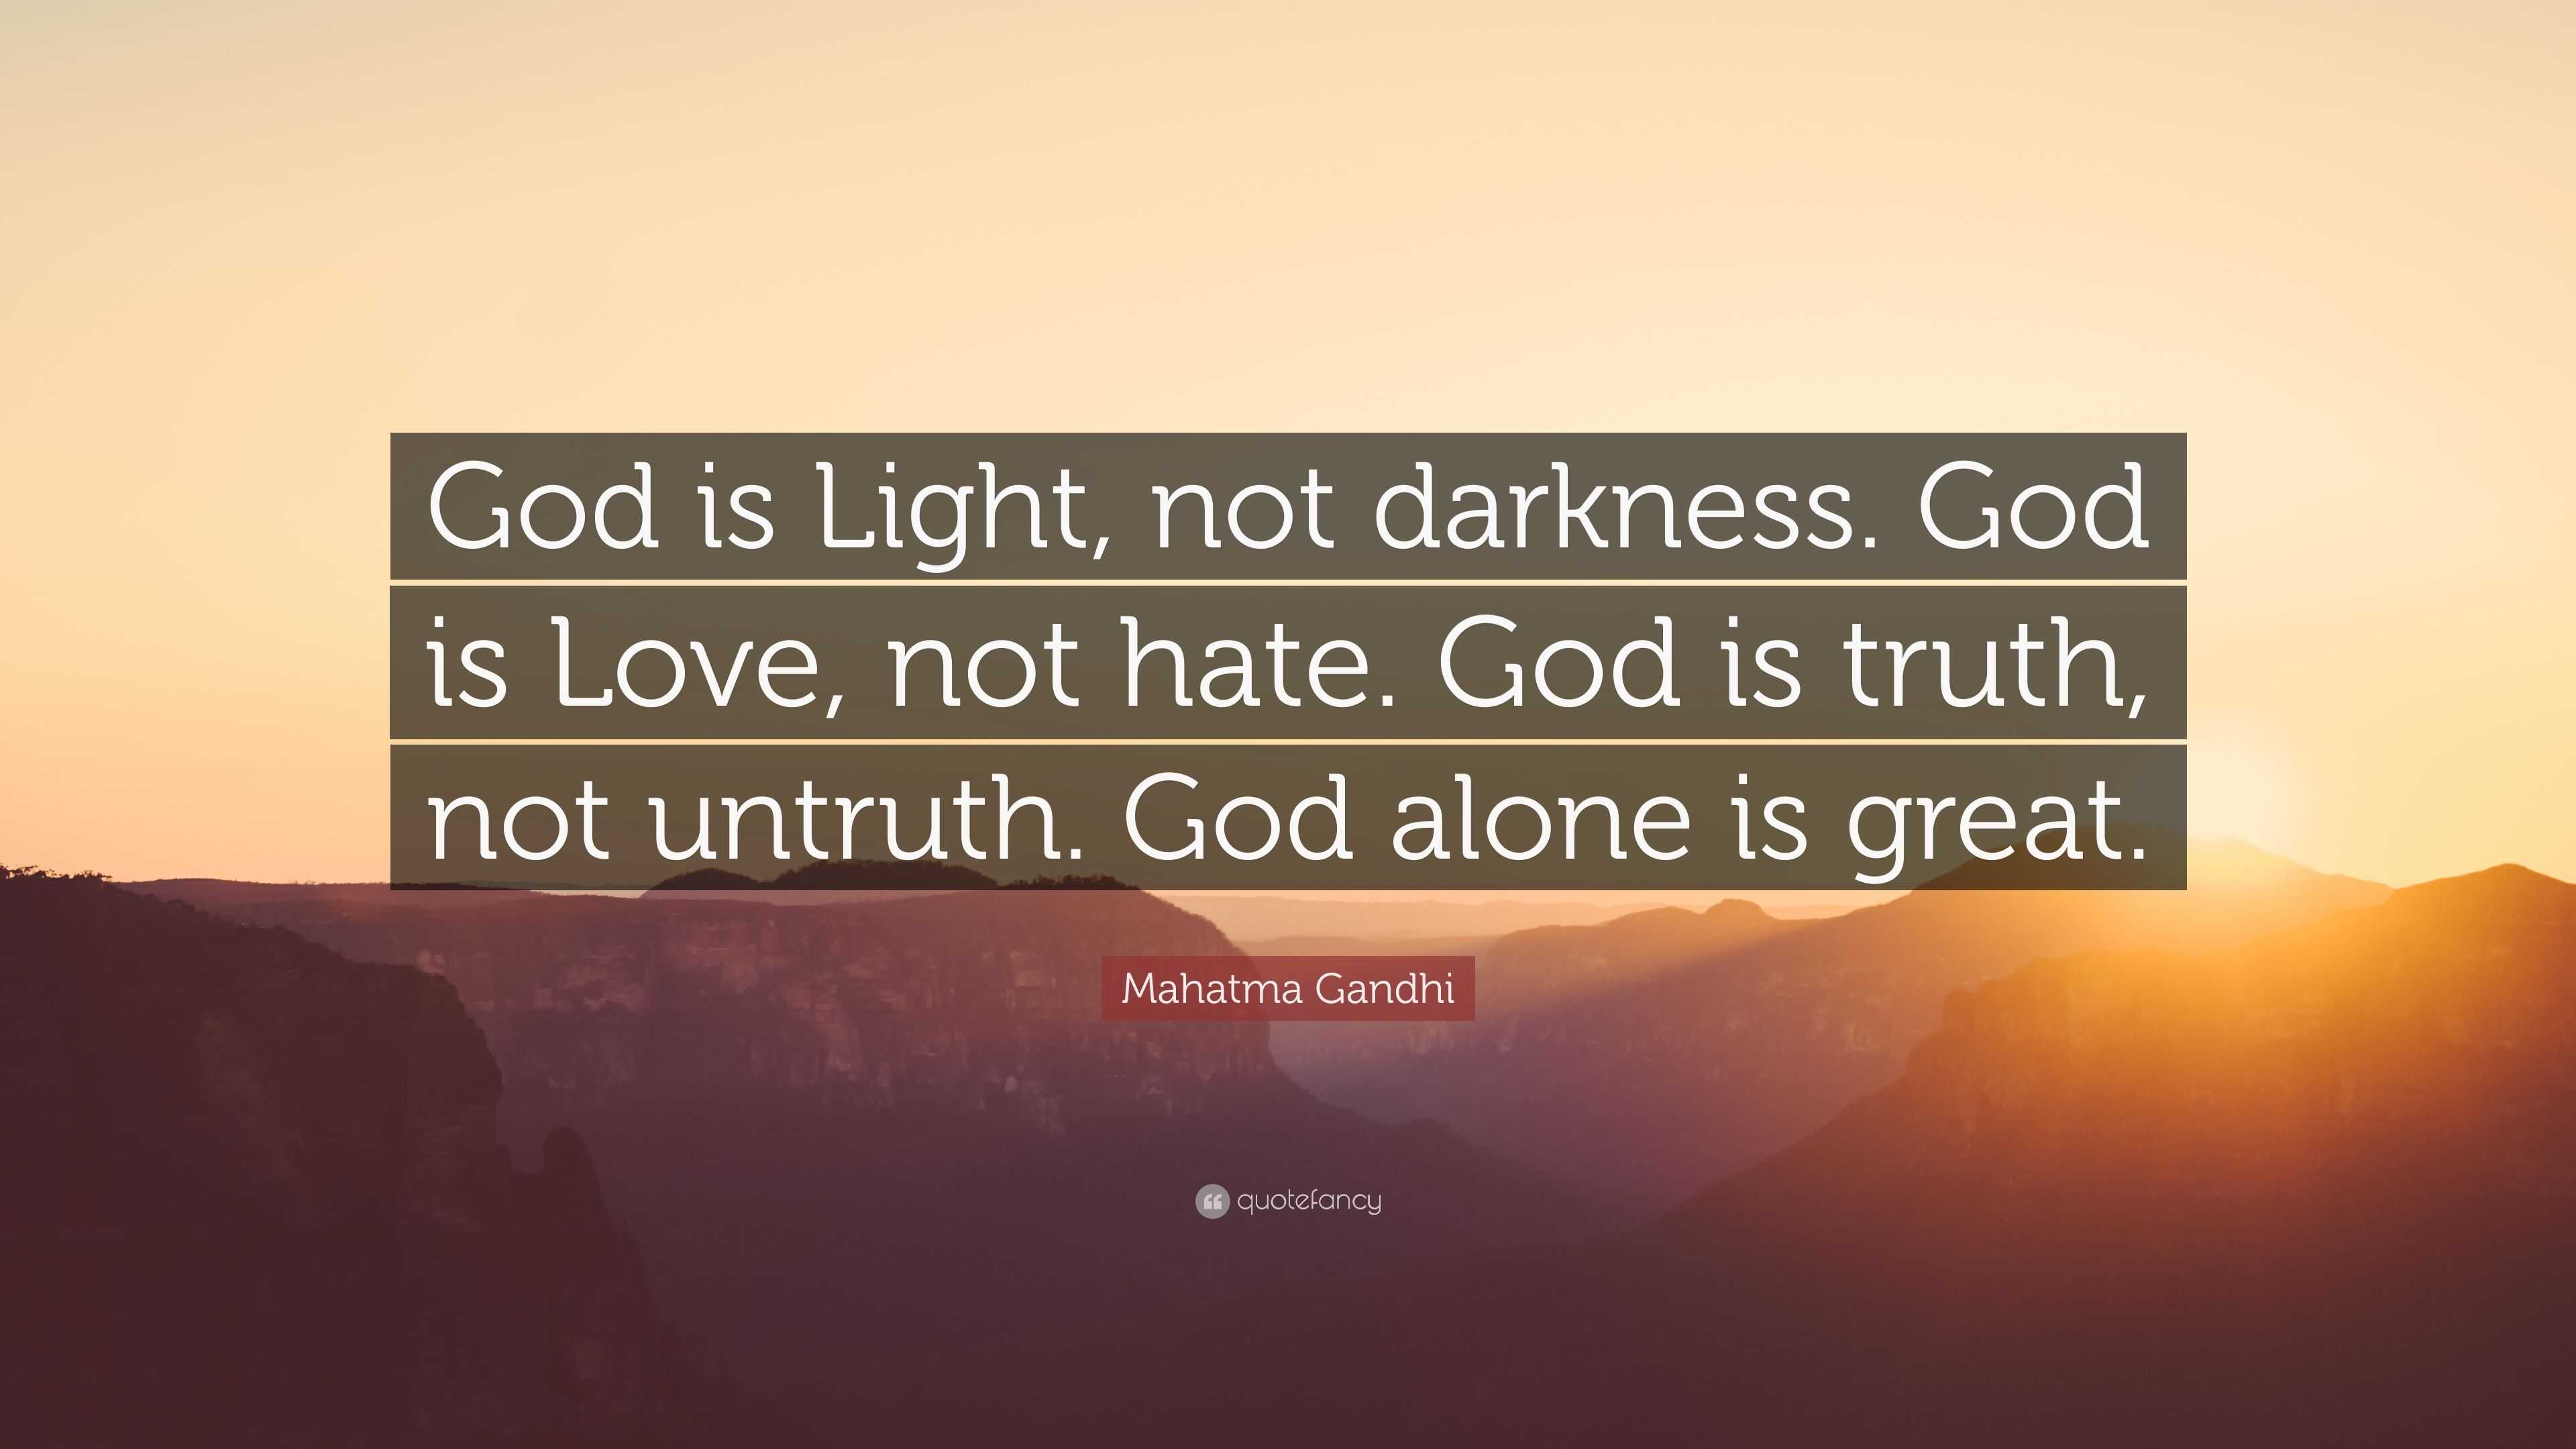 Mahatma Gandhi Quote “God is Light not darkness God is Love